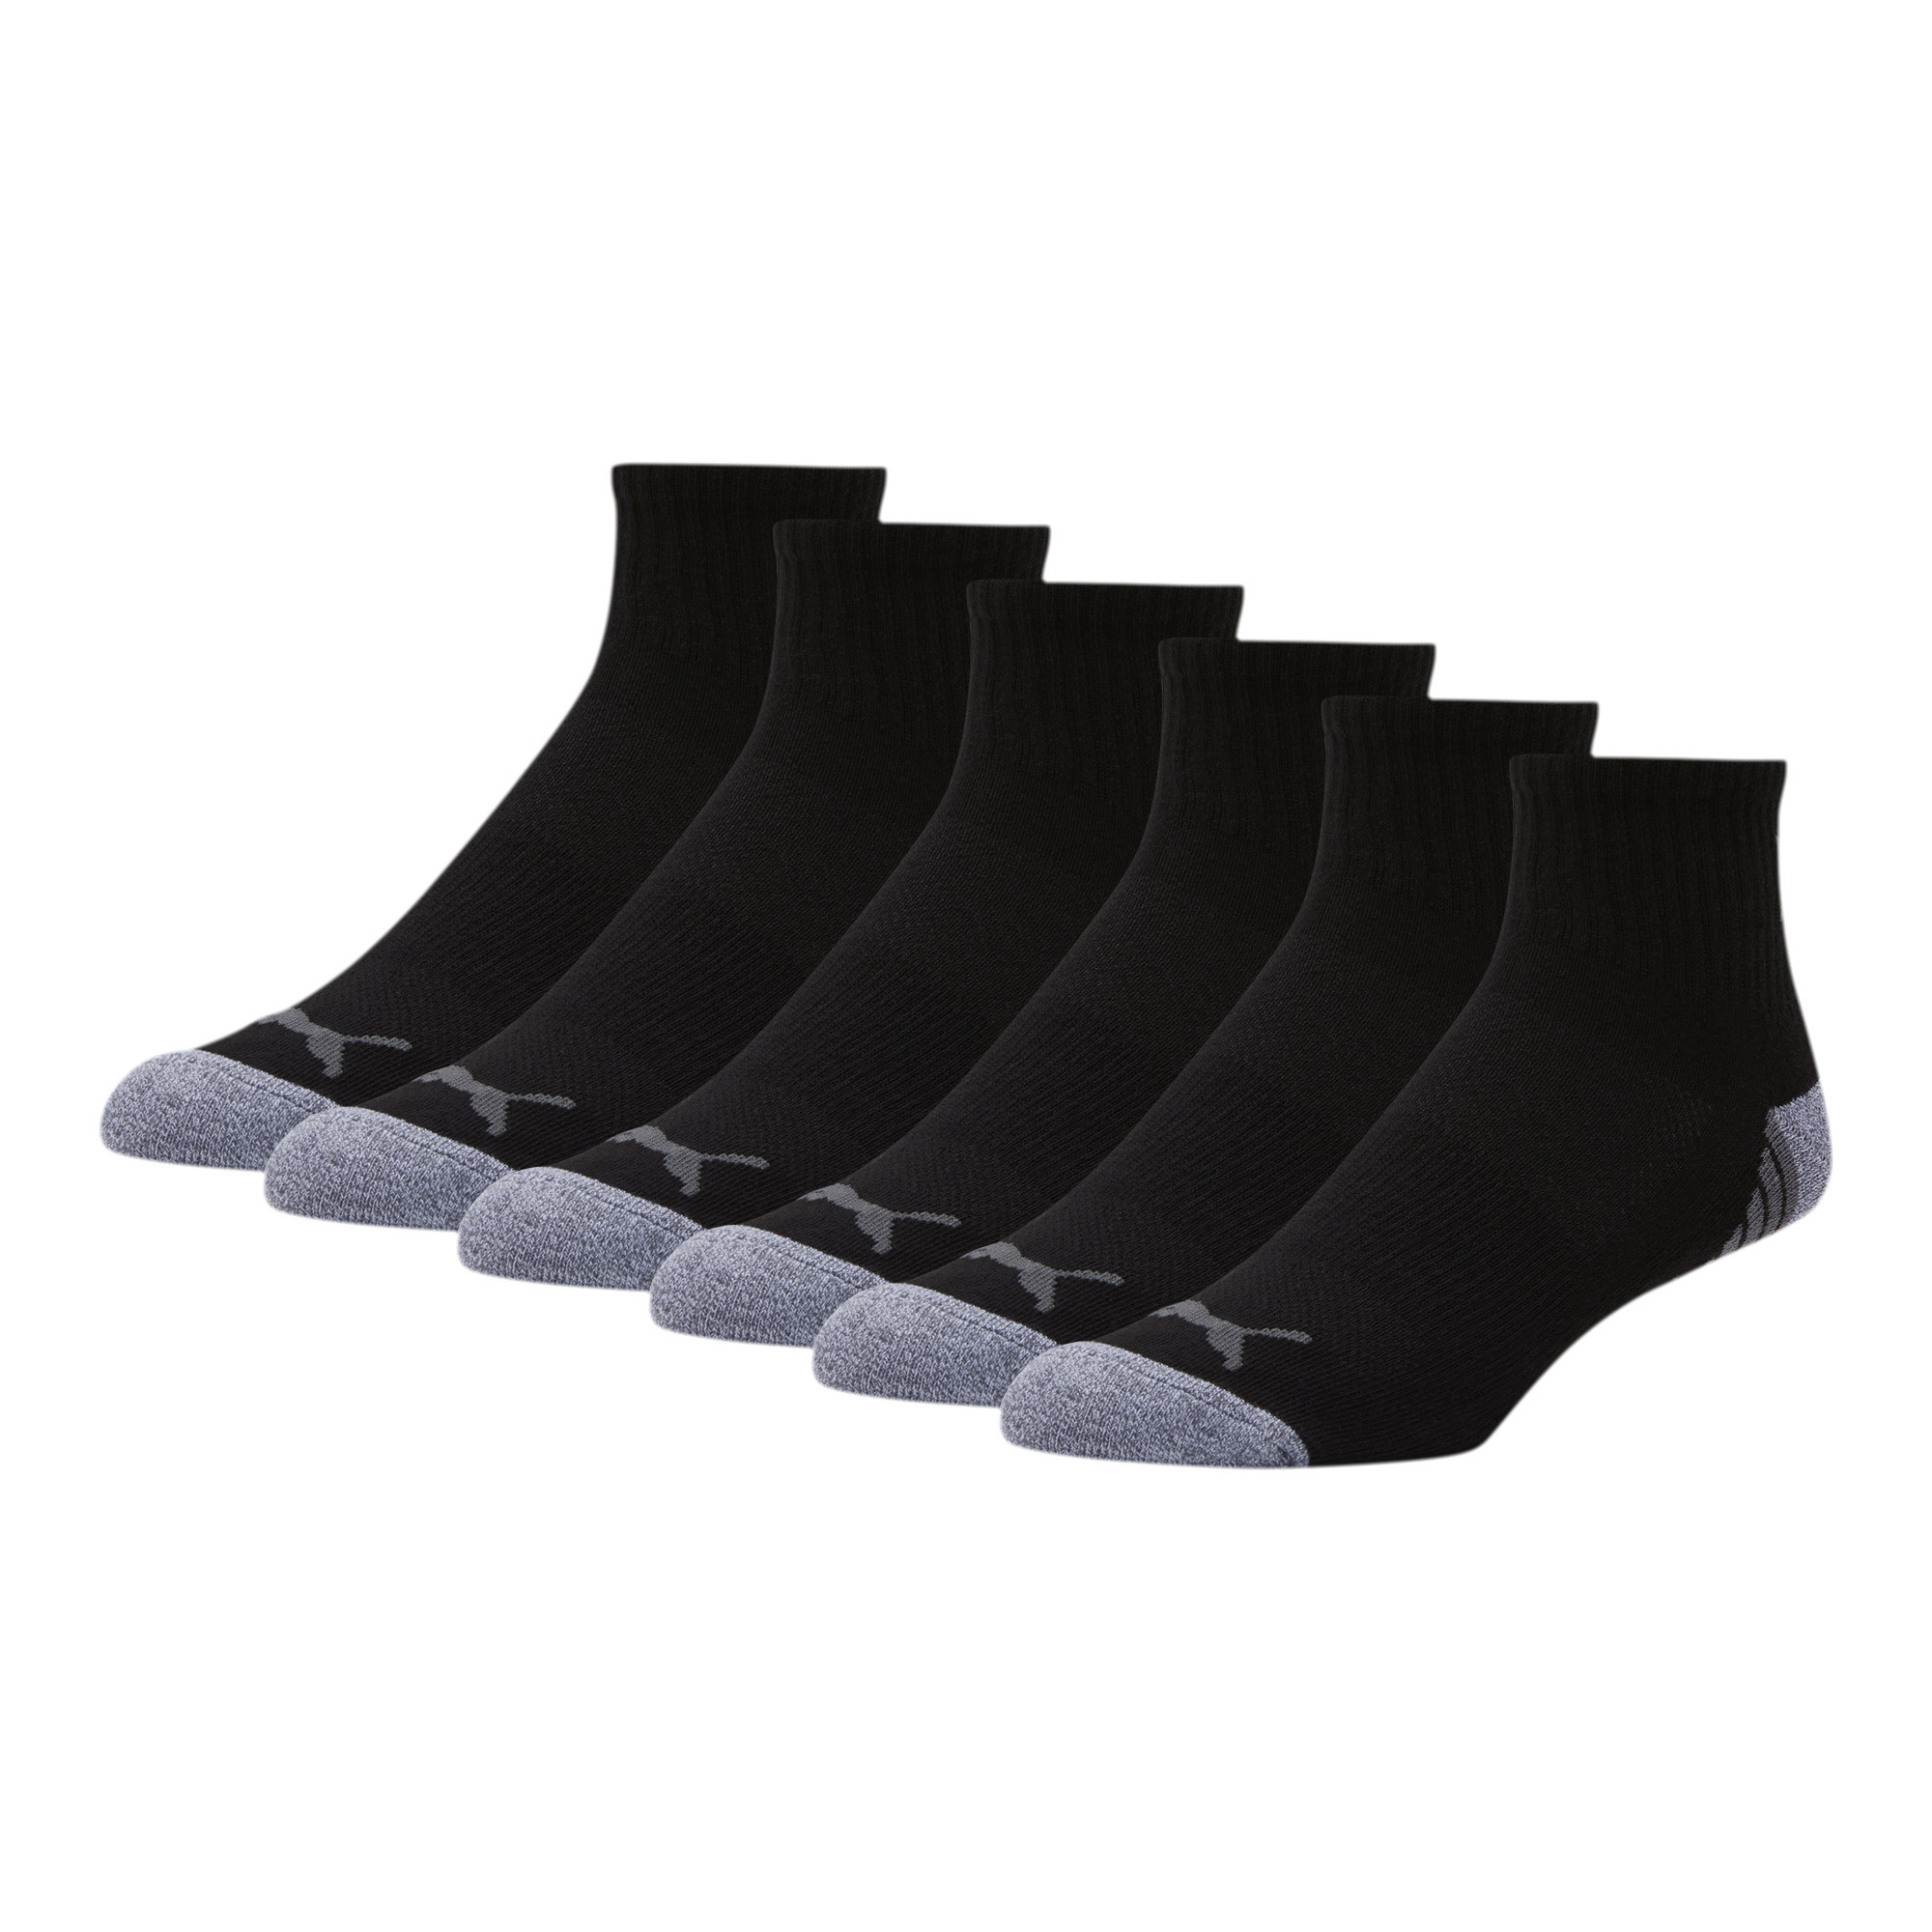 PUMA Men's Quarter Crew Wordmark Socks [6 Pack] Black Size 10-13